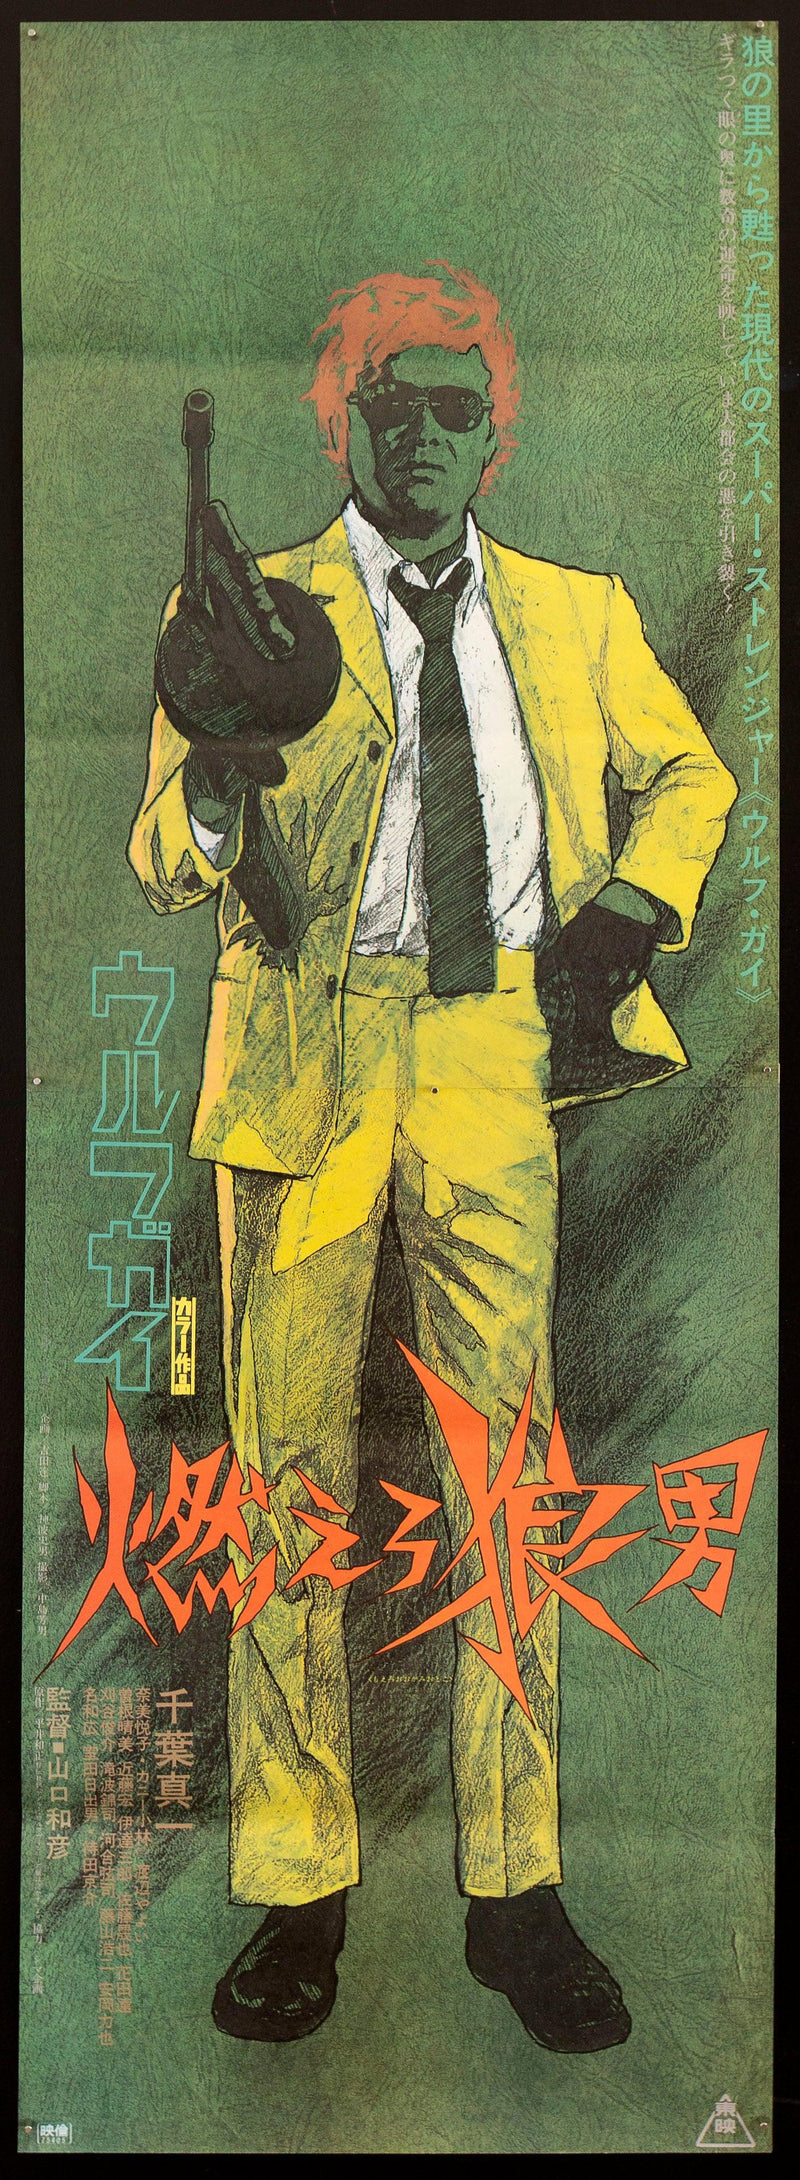 Wolf Guy Japanese 2 Panel (20x57) Original Vintage Movie Poster